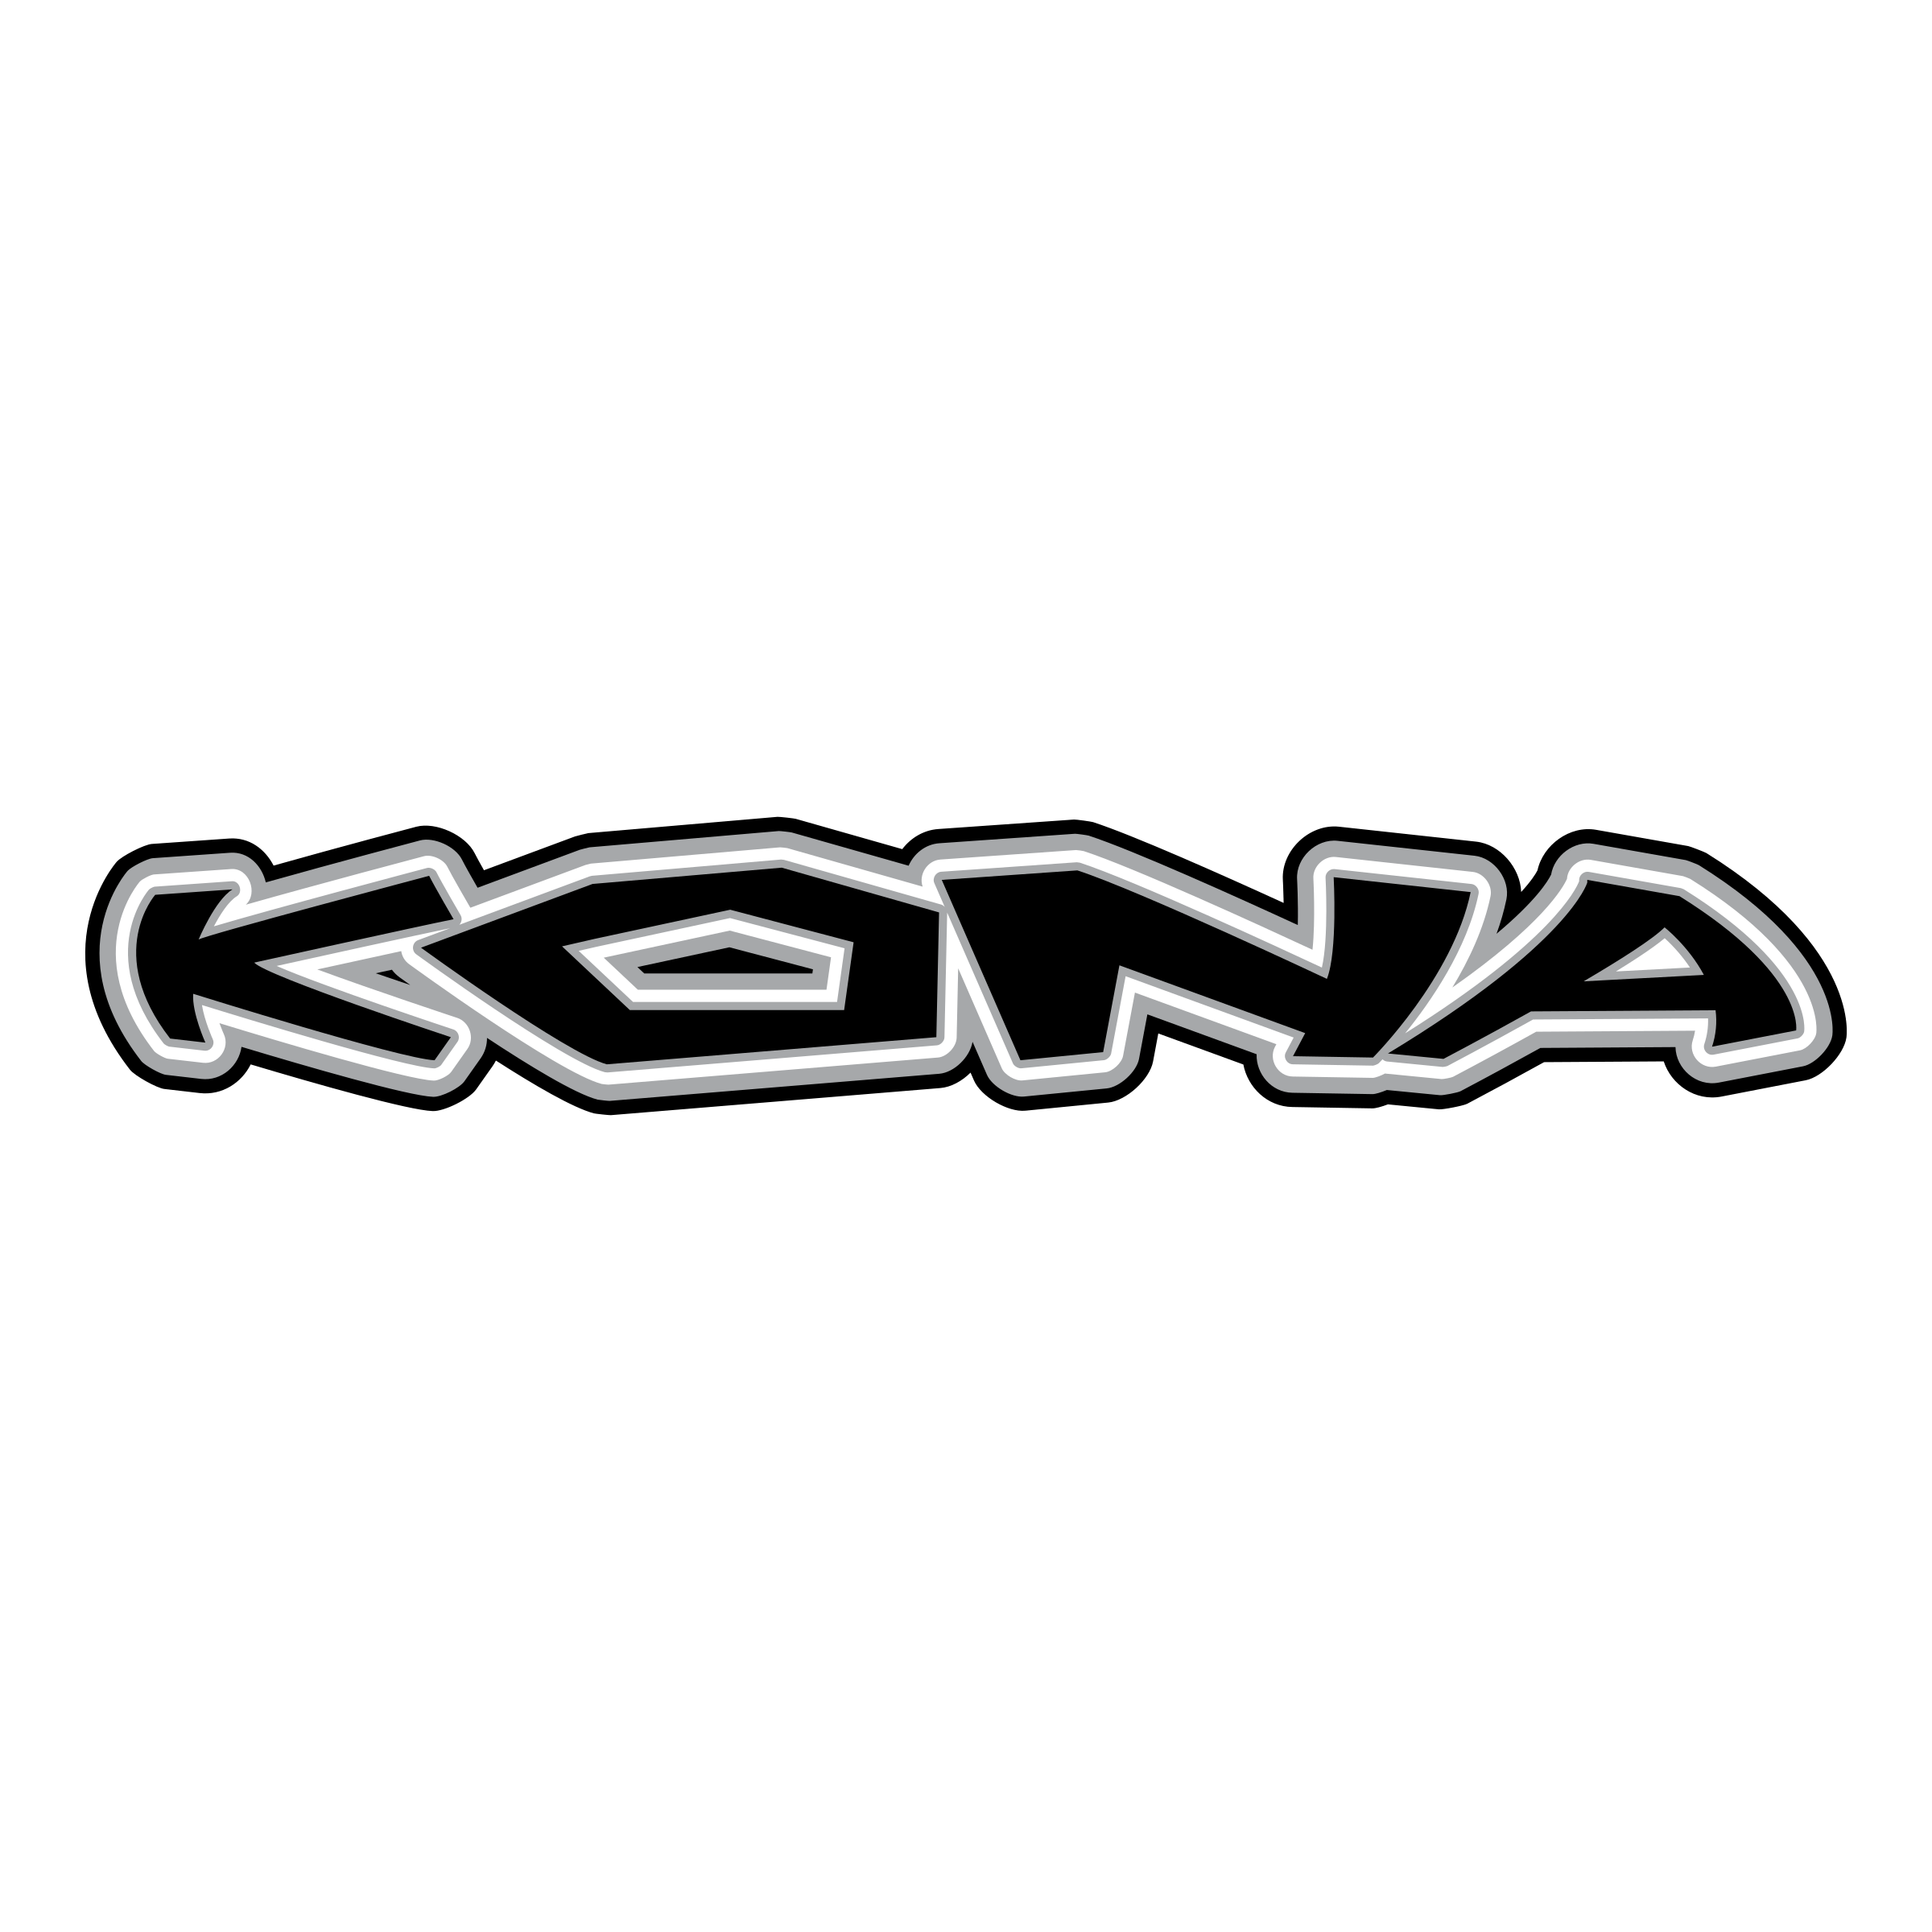 Kona Logo - Kona Logo PNG Transparent & SVG Vector - Freebie Supply